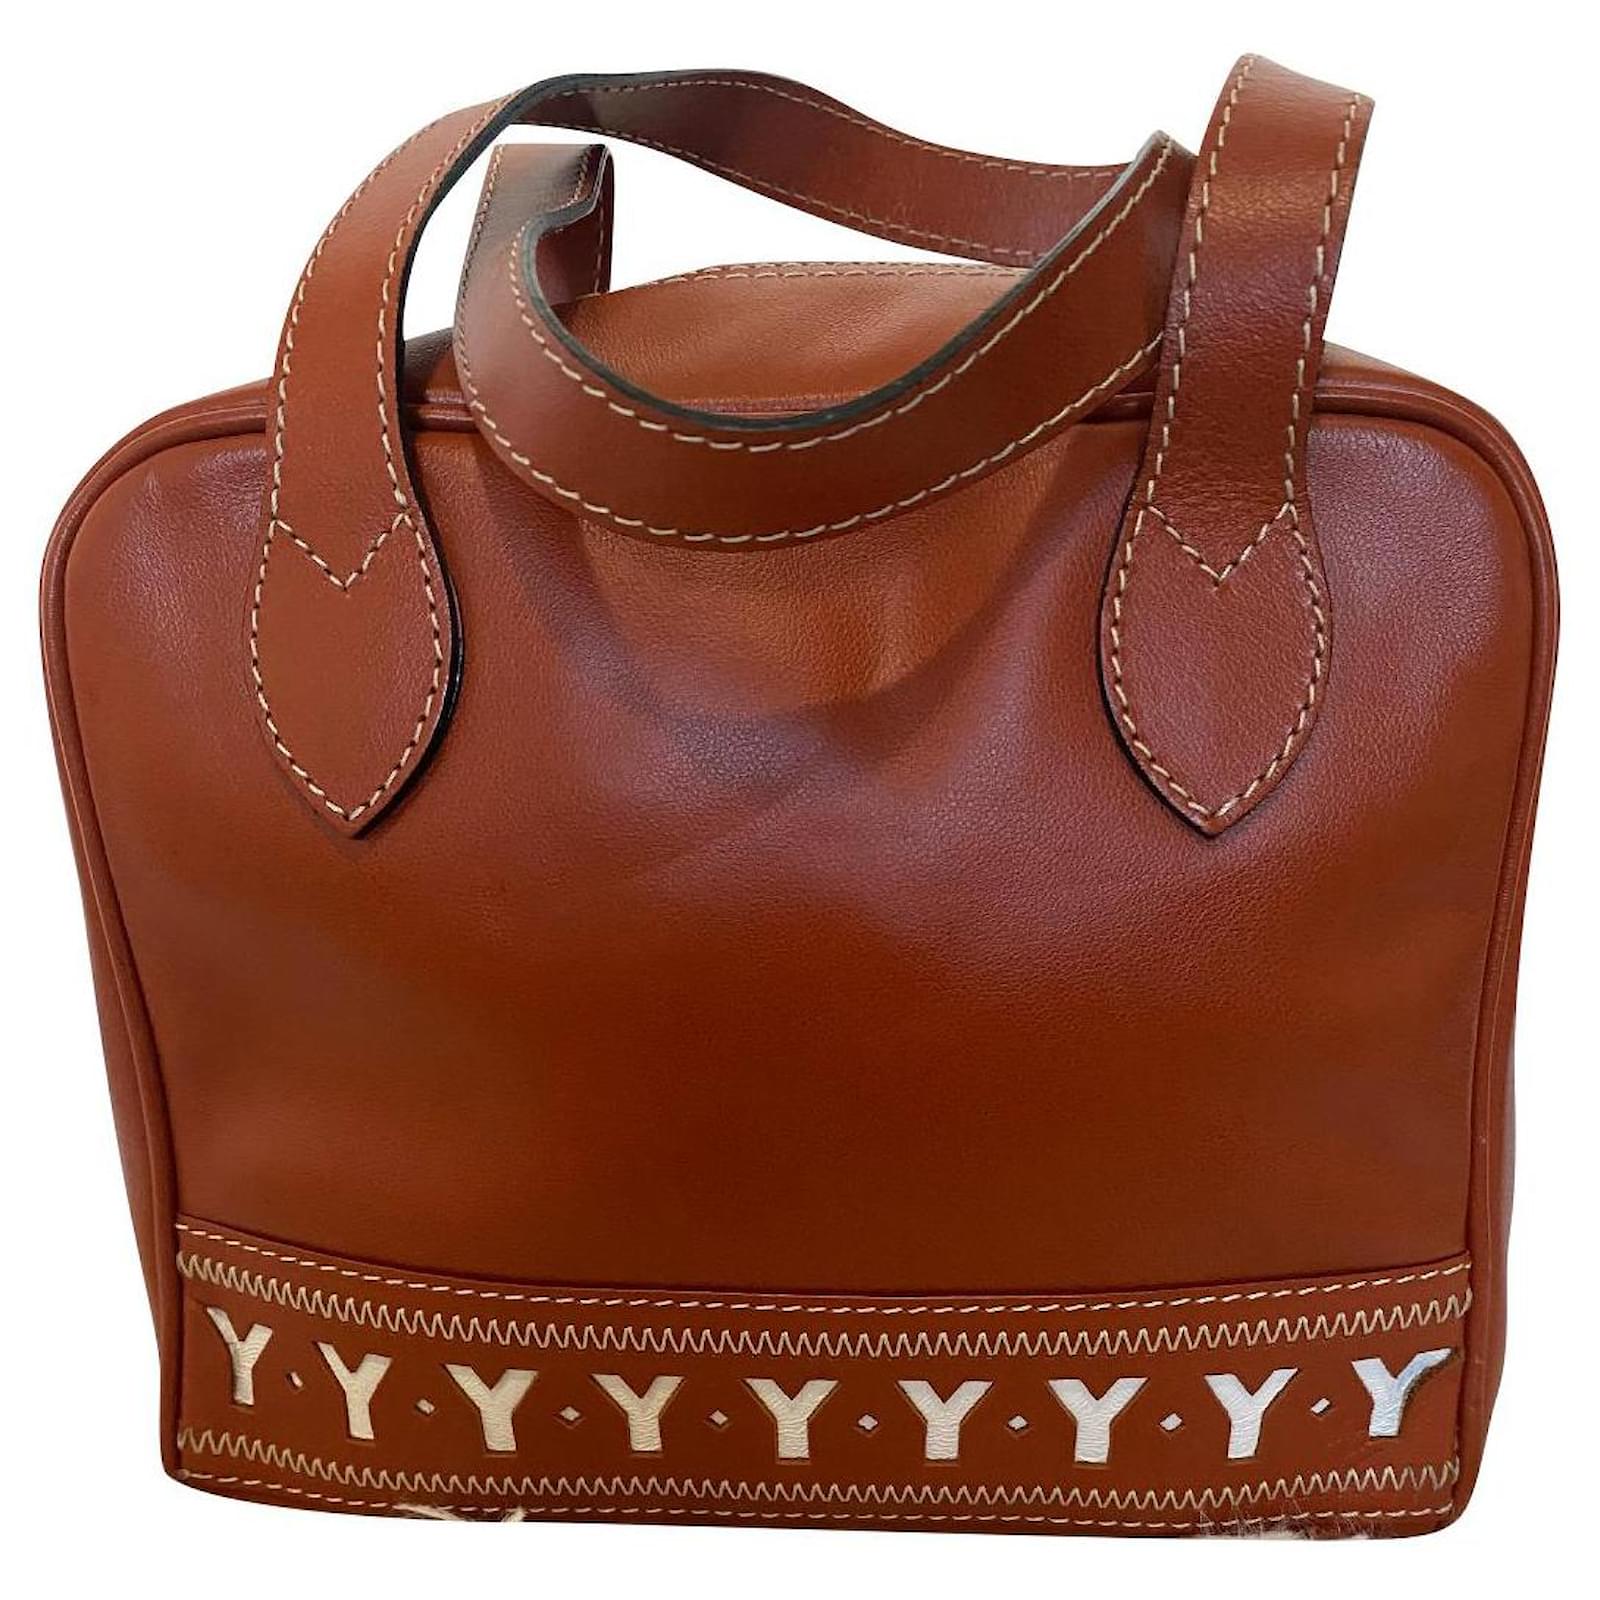 YSL Yves Saint Laurent Handbags | Mercari